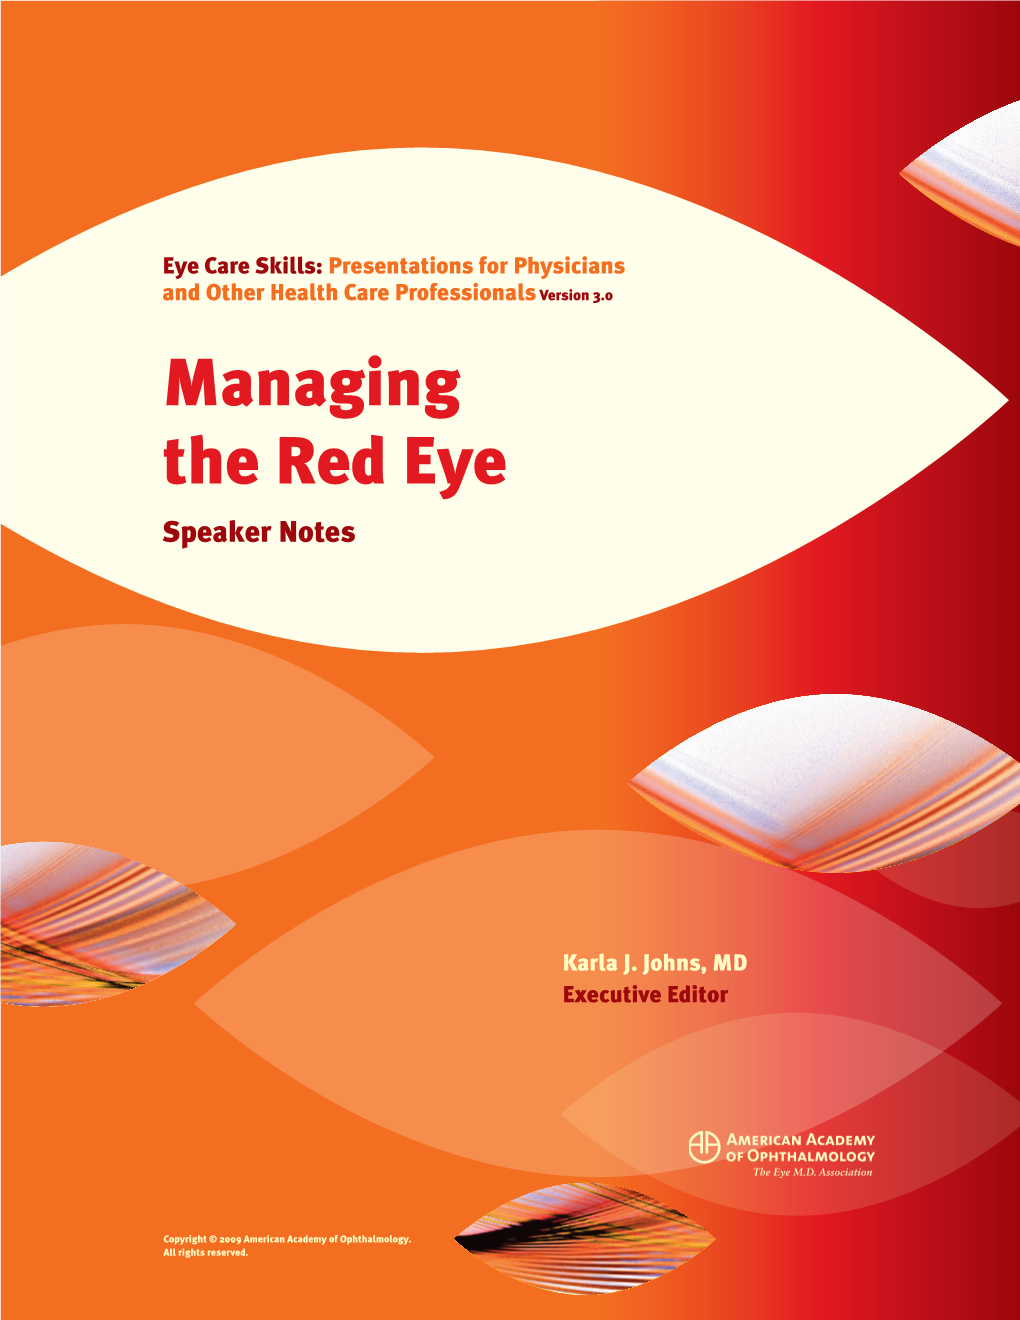 Managing the Red Eye Speaker Notes